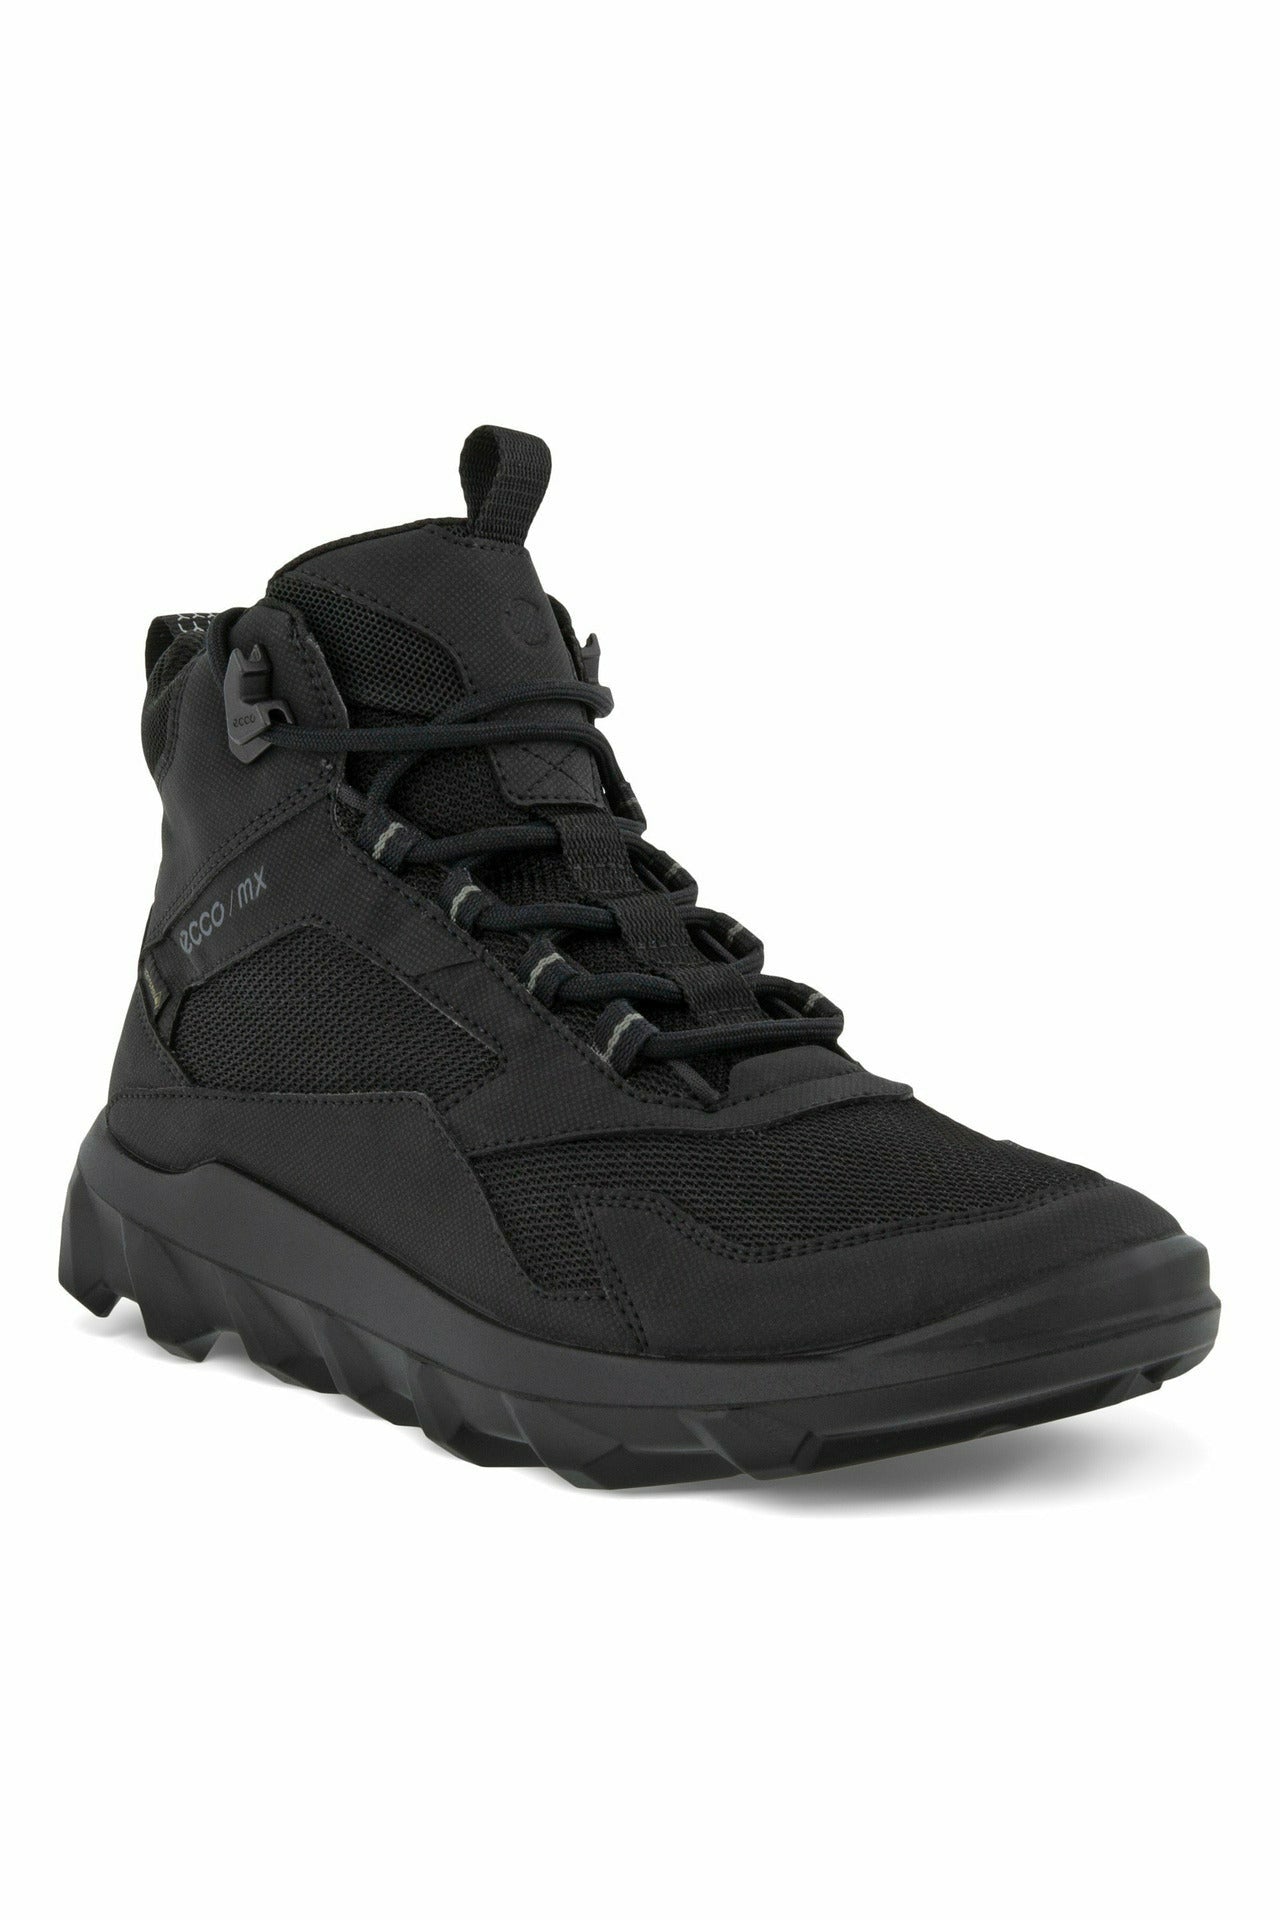 Ecco Mx Ladies walking boot 820223-51052 in black